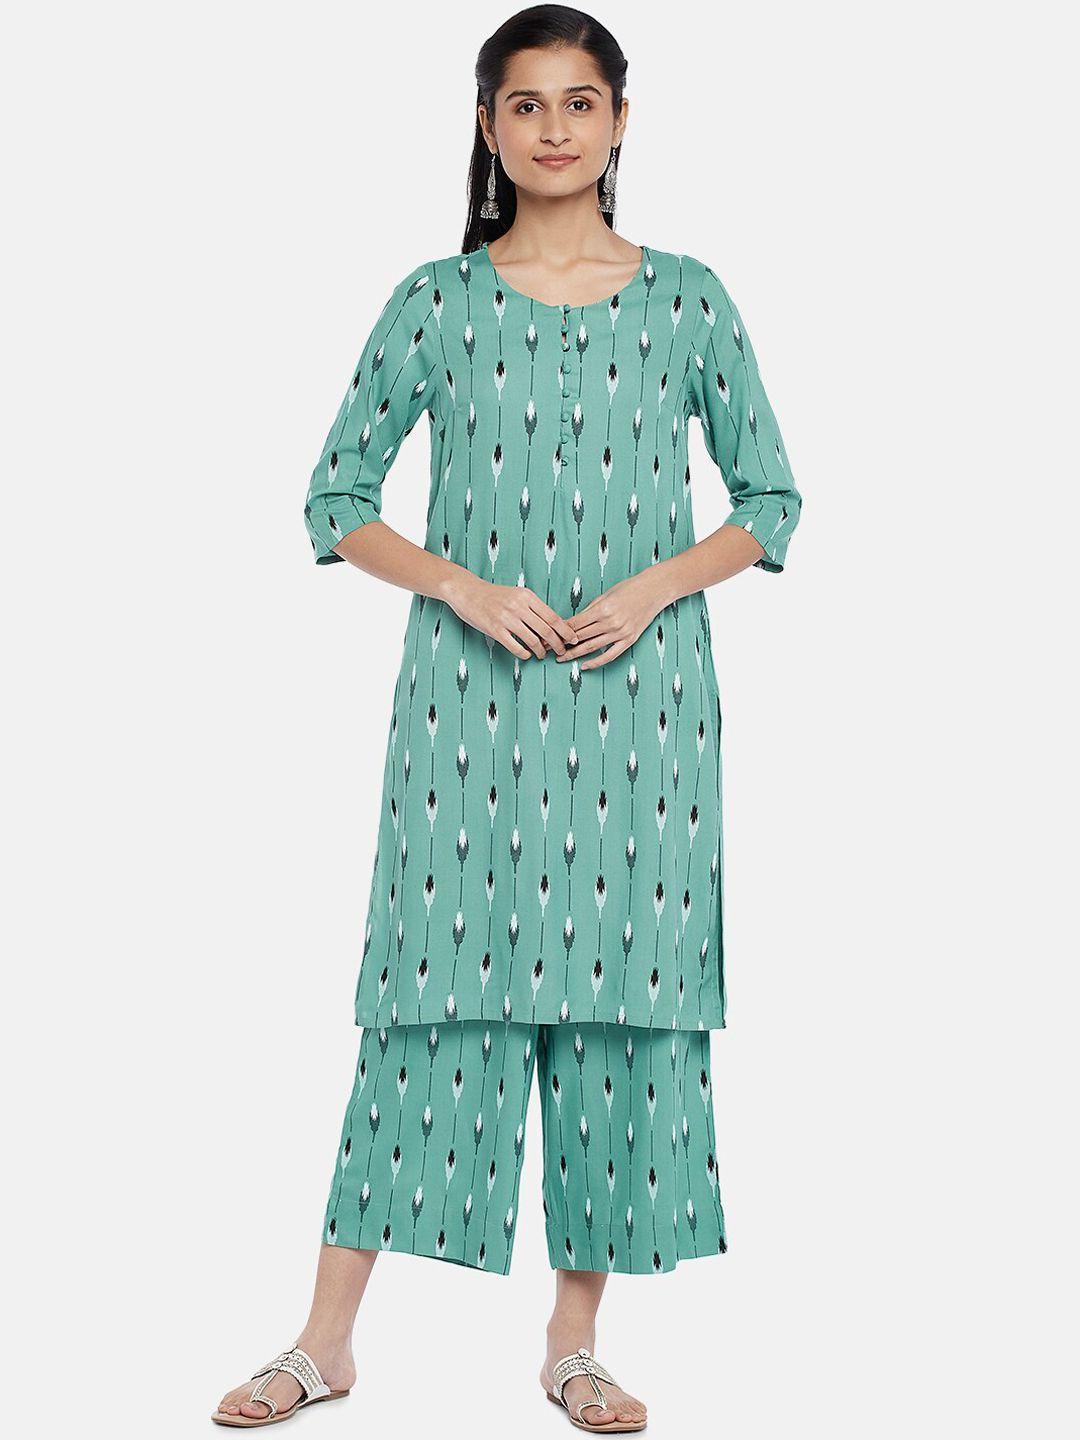 rangmanch by pantaloons women green & white printed kurta with palazzos